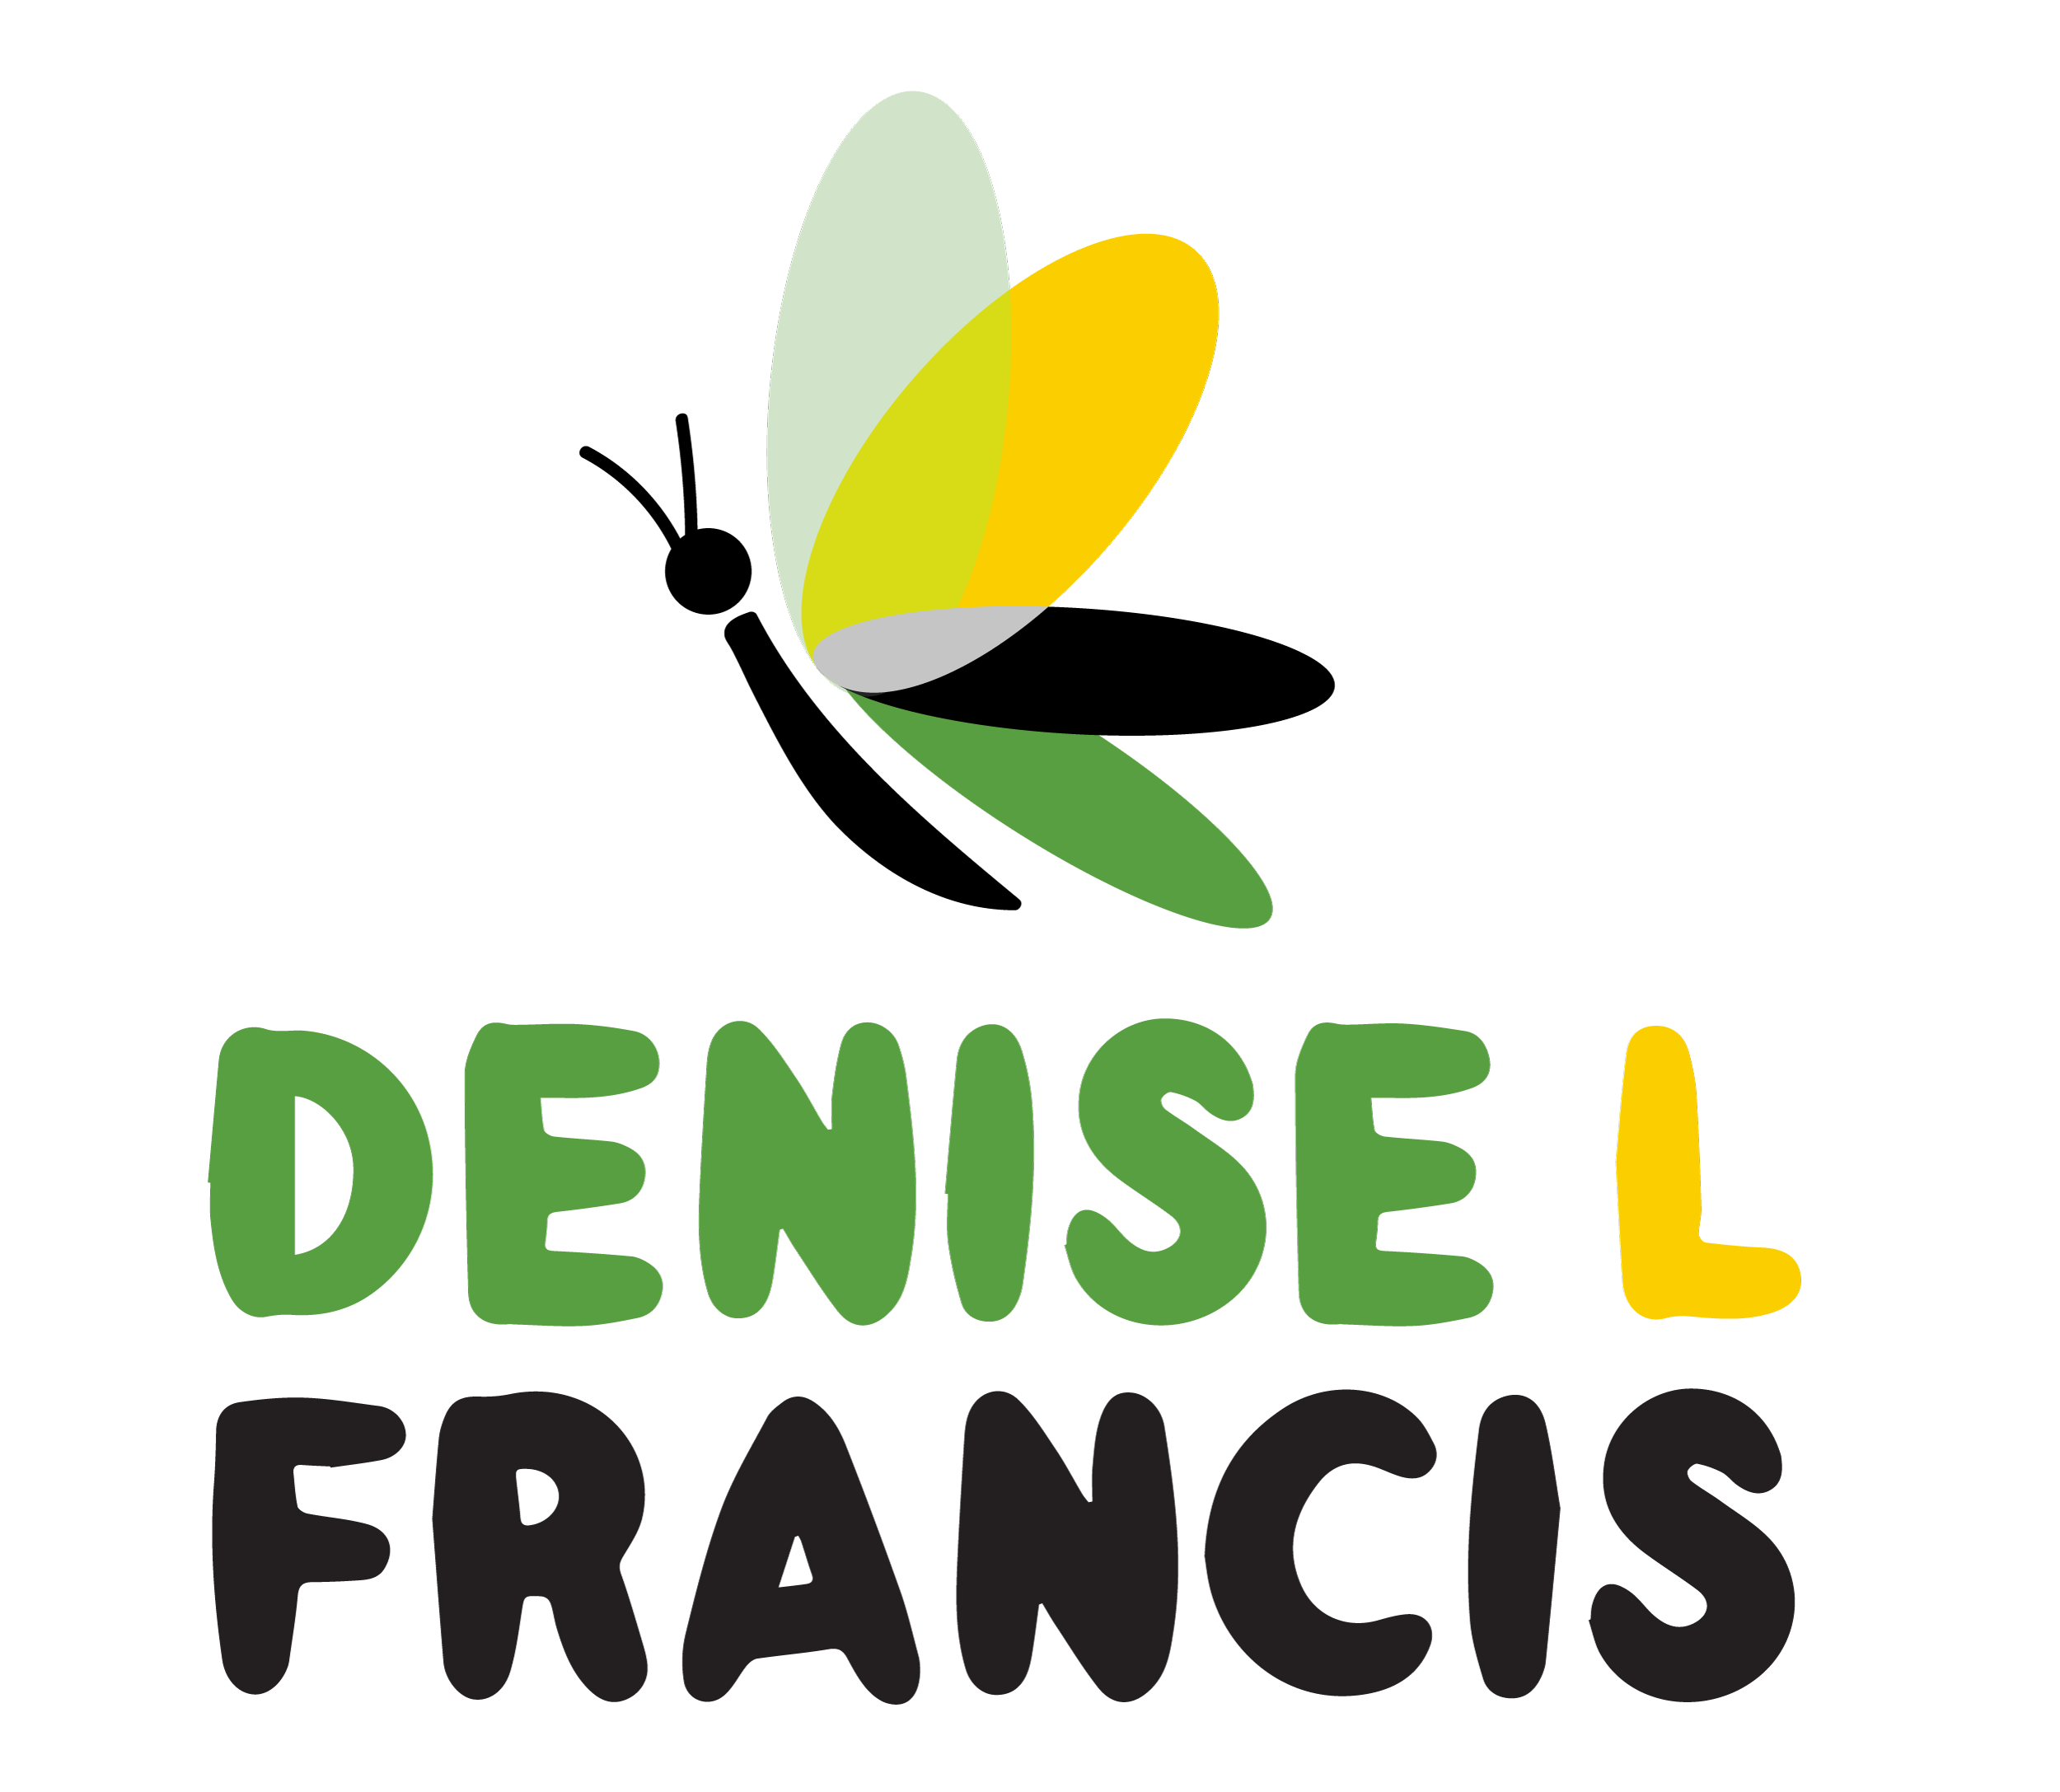 DeniseLFrancis_sq.png